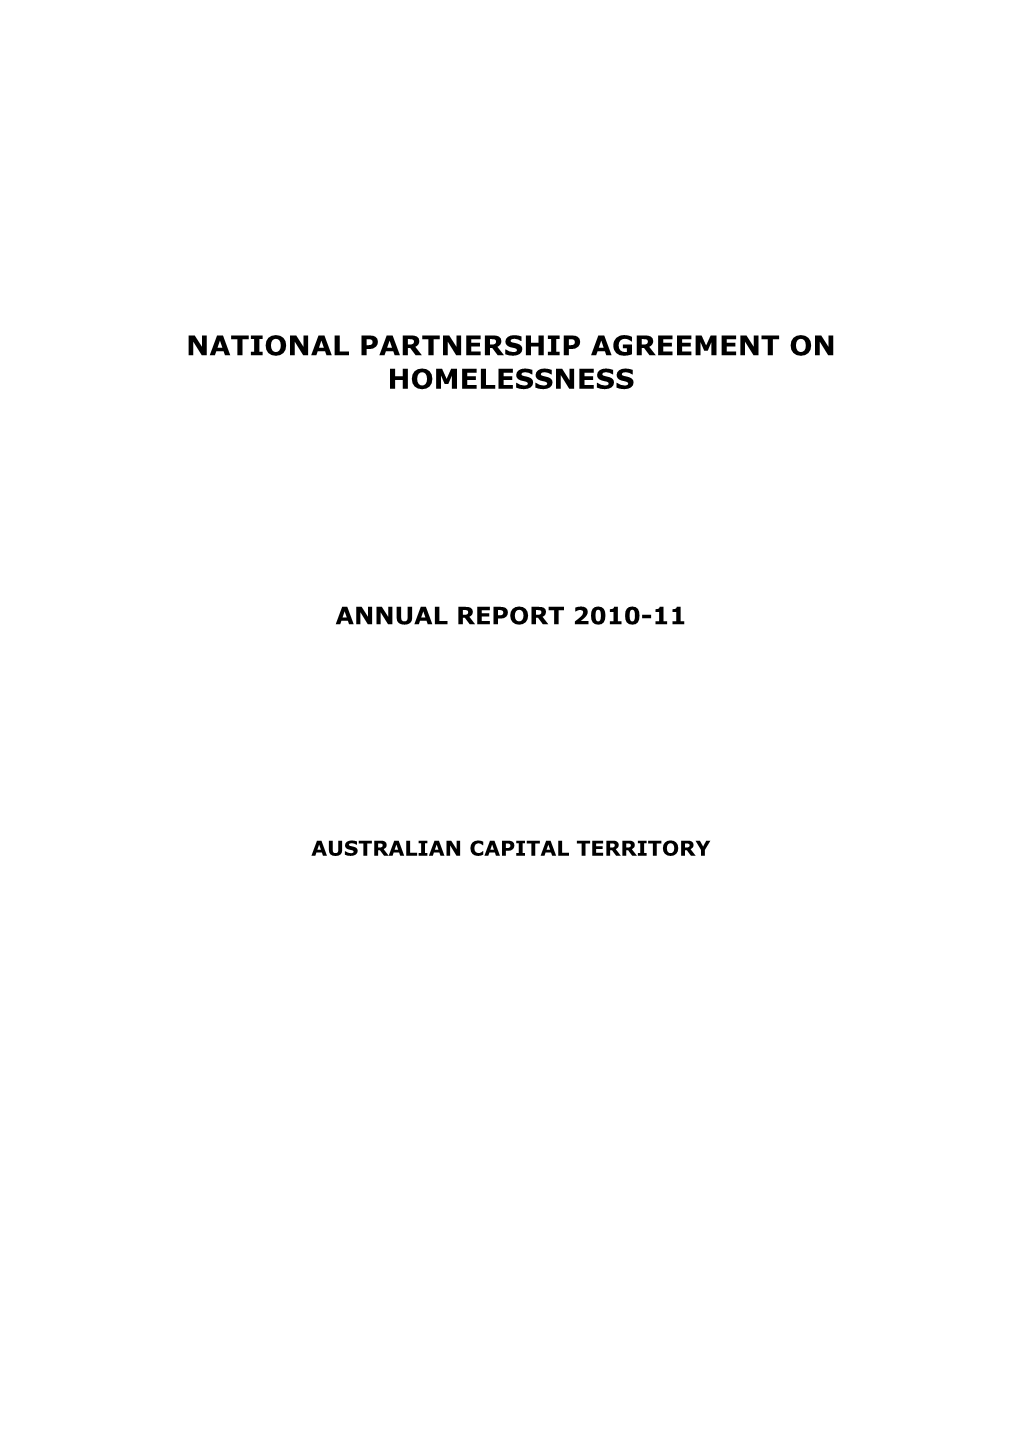 Australian Capital Territory National Partnership Agreement on Homelessness Annual Report